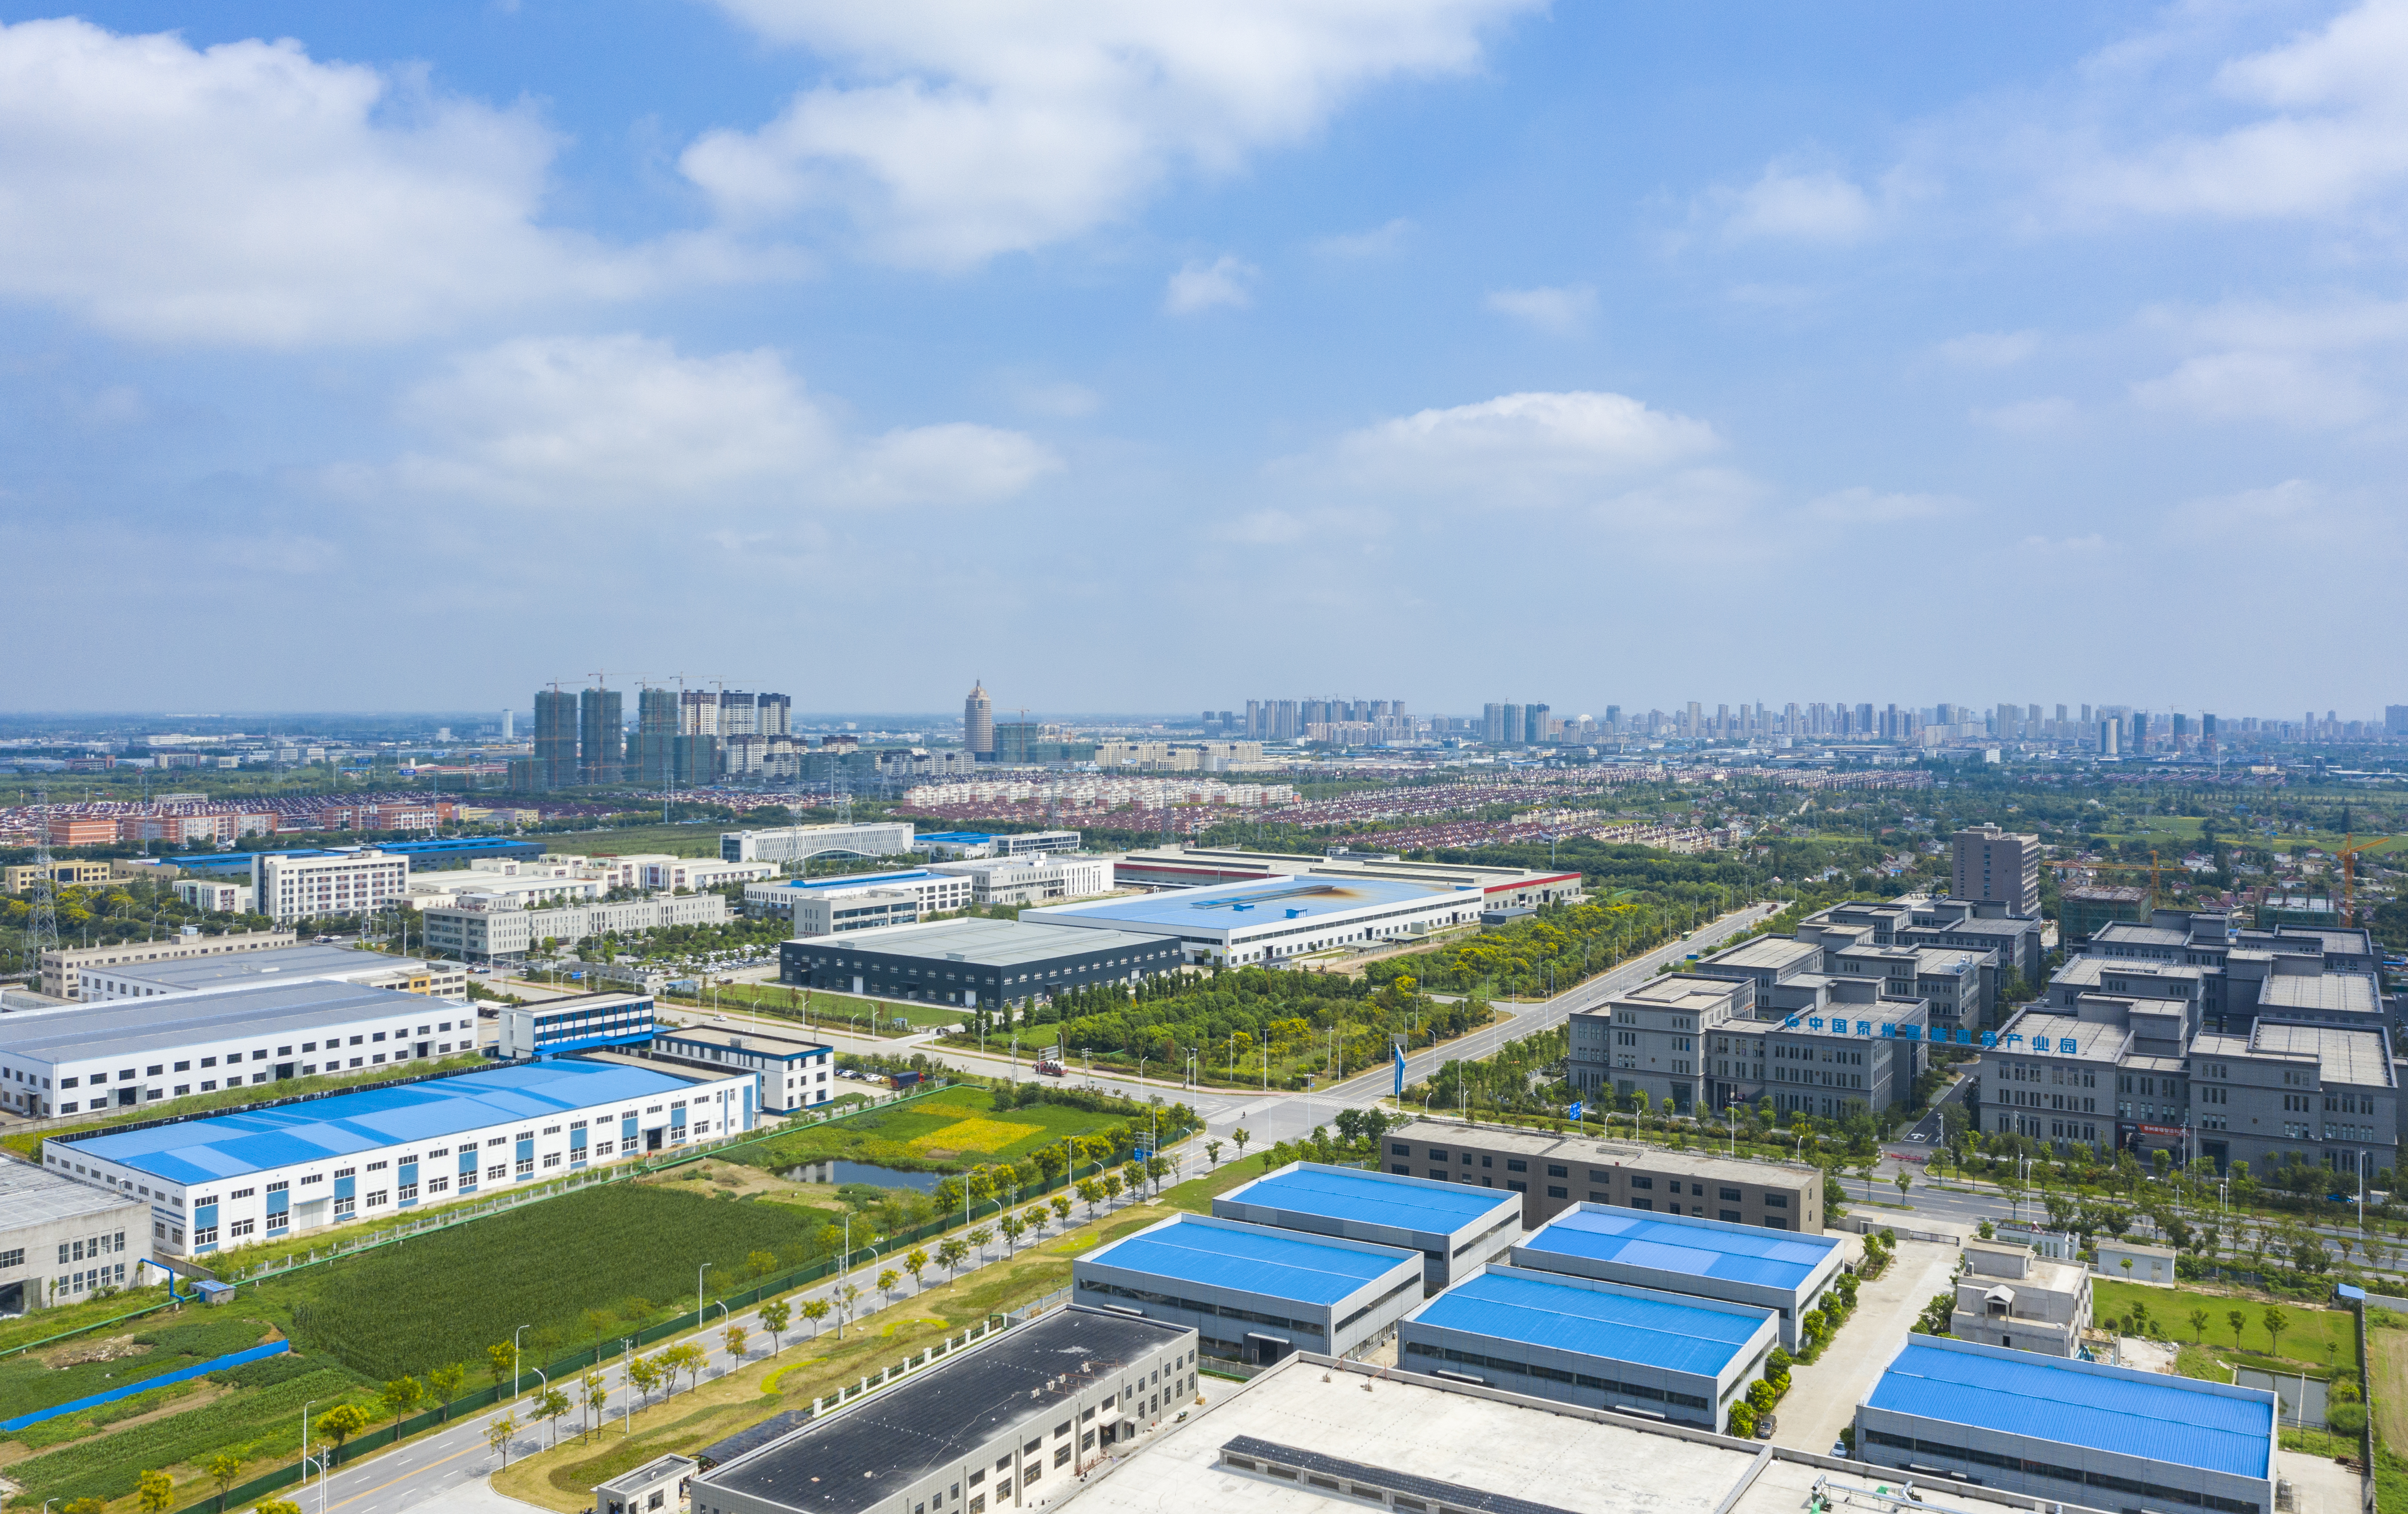 Taizhou city events build links with Harbin universities